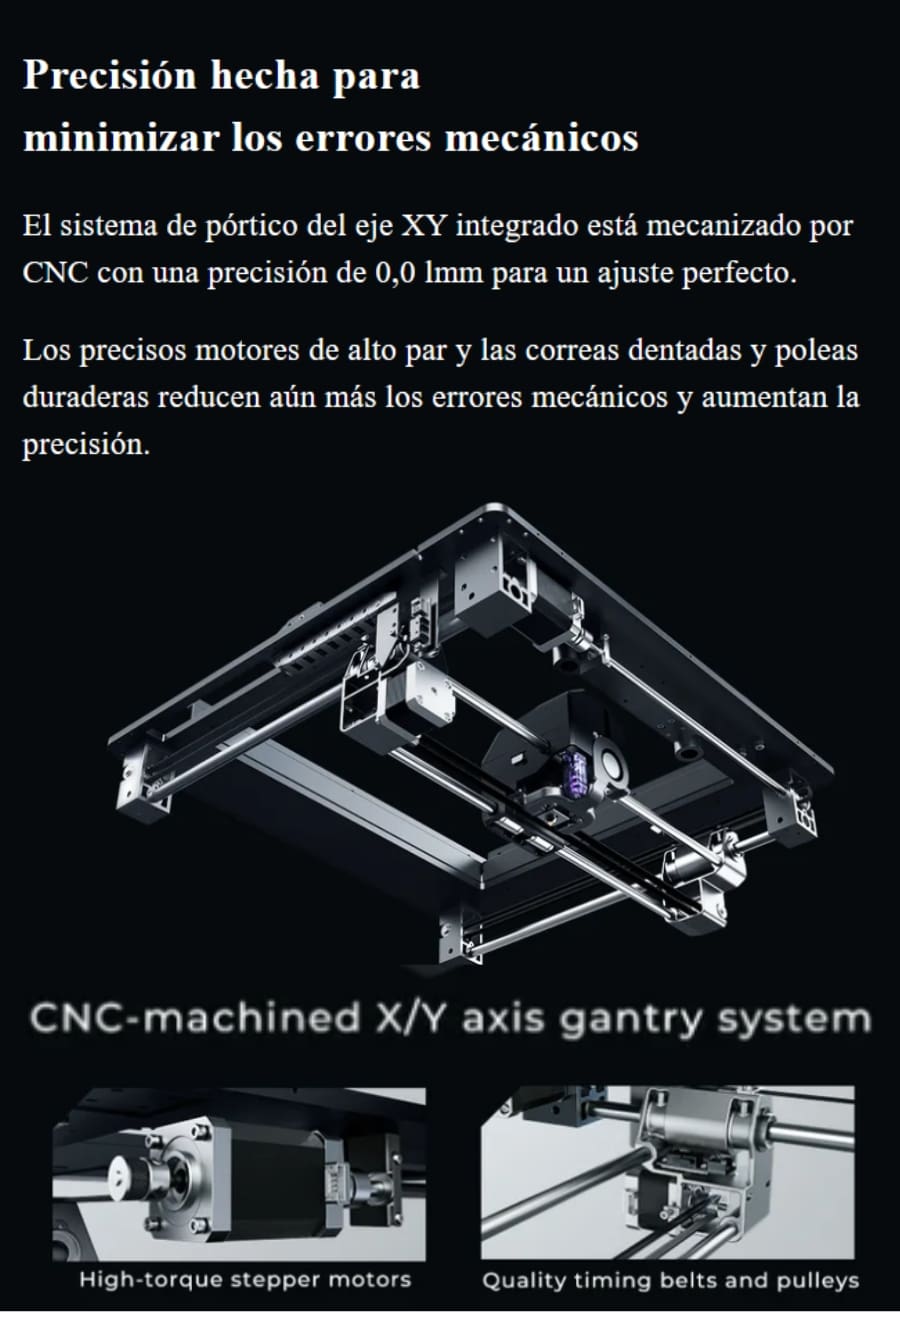 Sermoon D3 Creality | Tamaño Imp 300x250x300mm | Impresora 3D |